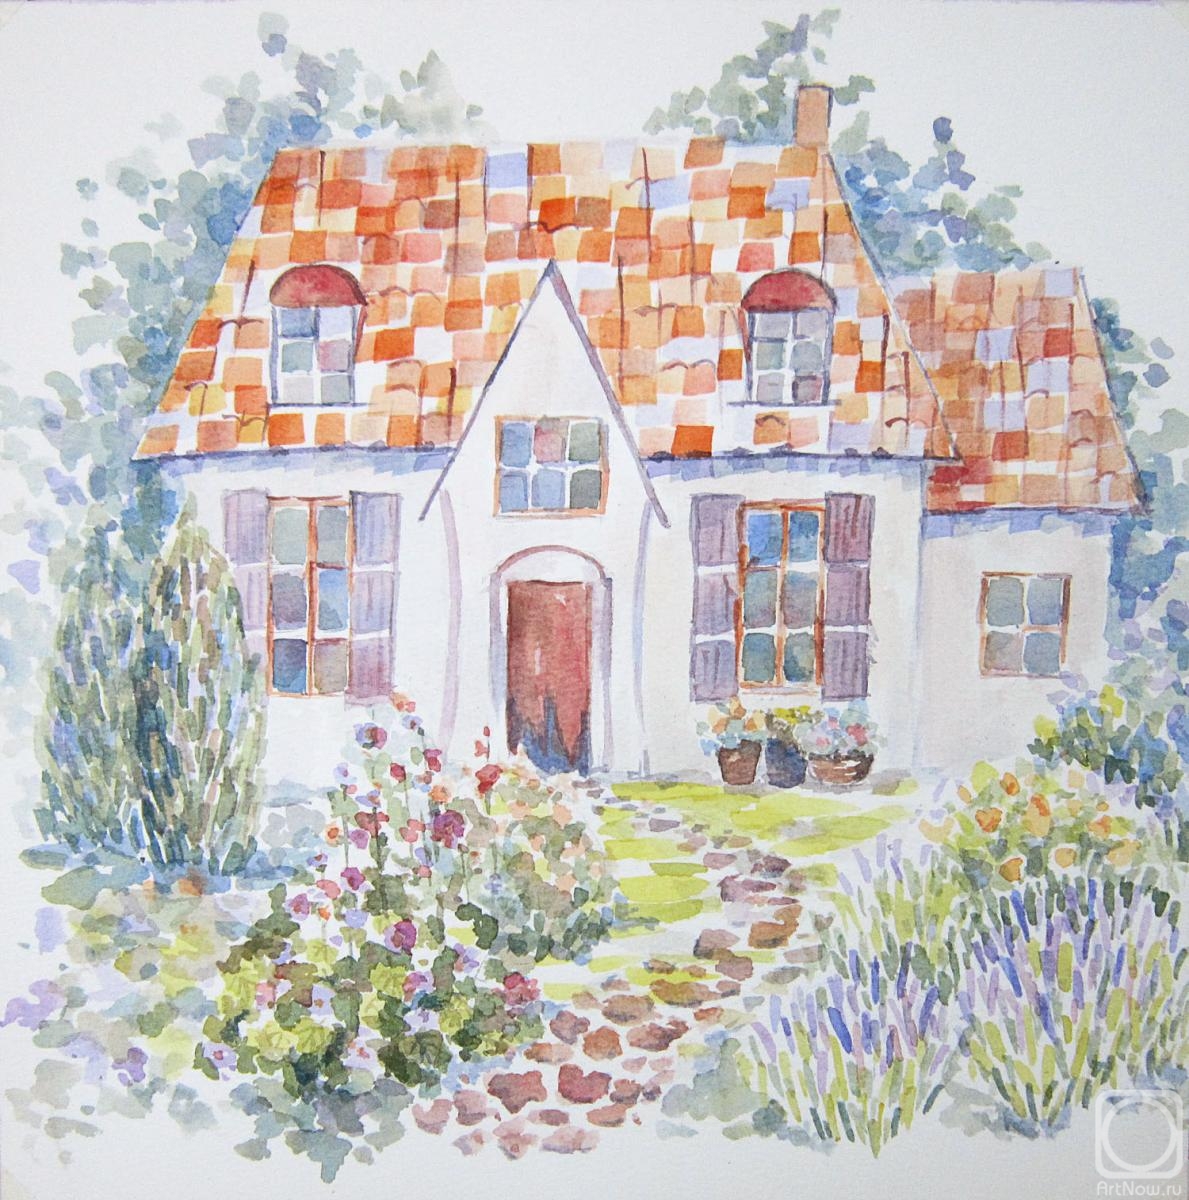 Zhmakina Elena. A series of "Little houses". Summer